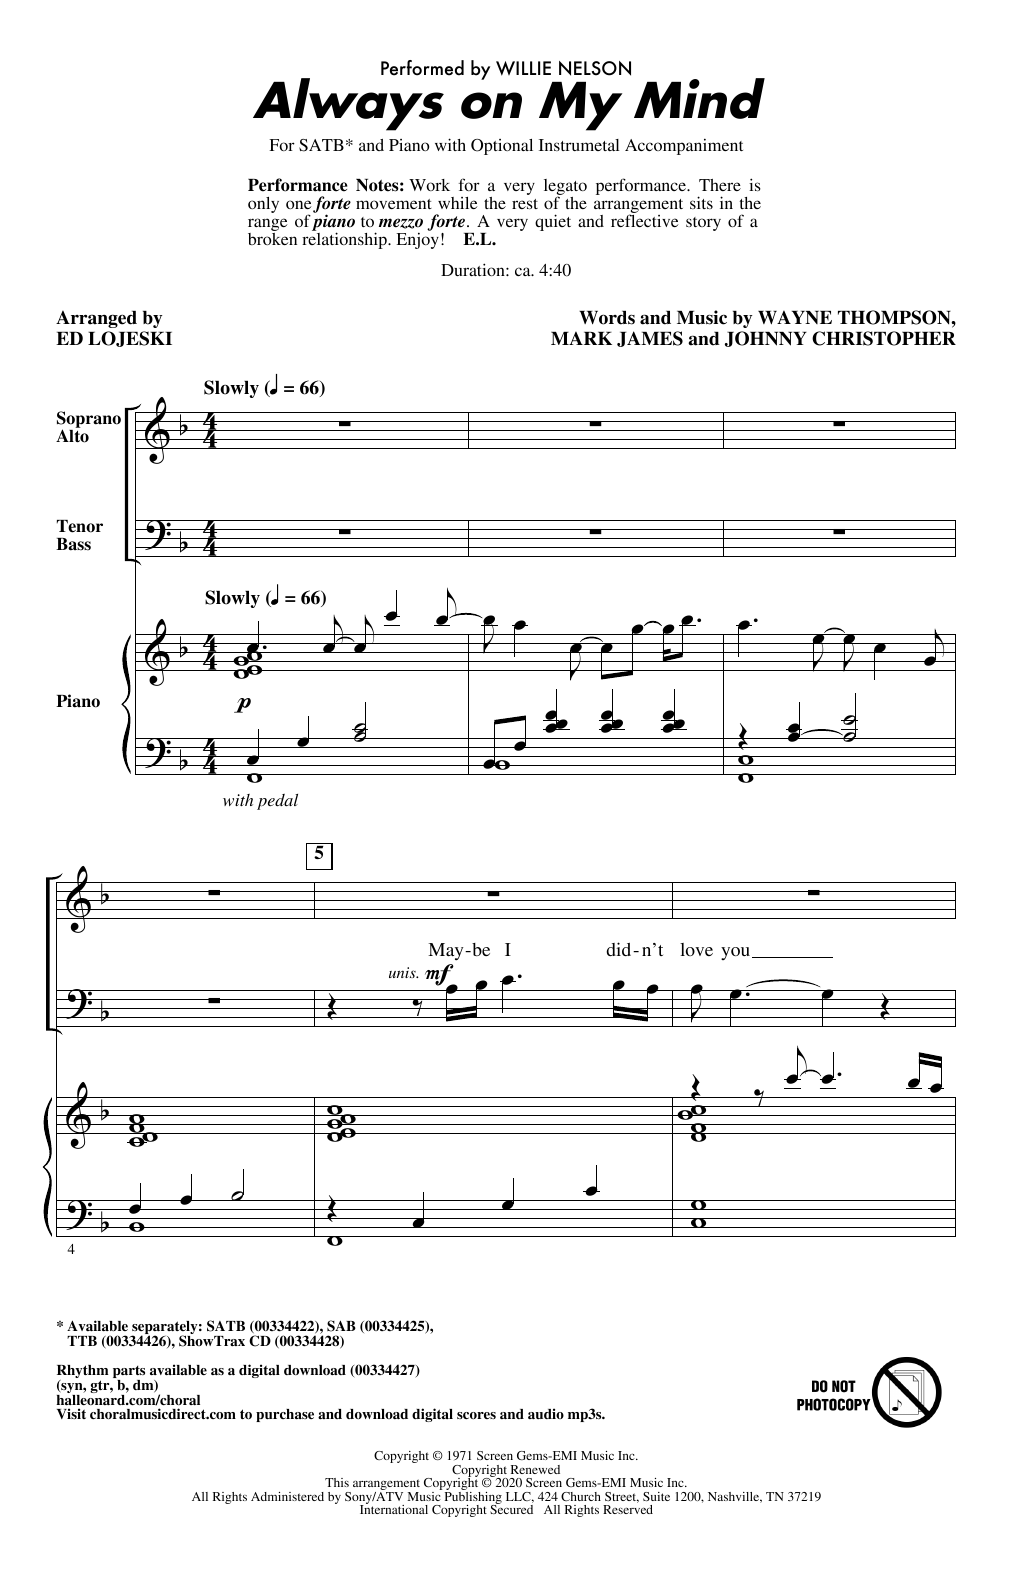 Willie Nelson Always On My Mind (arr. Ed Lojeski) Sheet Music Notes & Chords for SAB Choir - Download or Print PDF